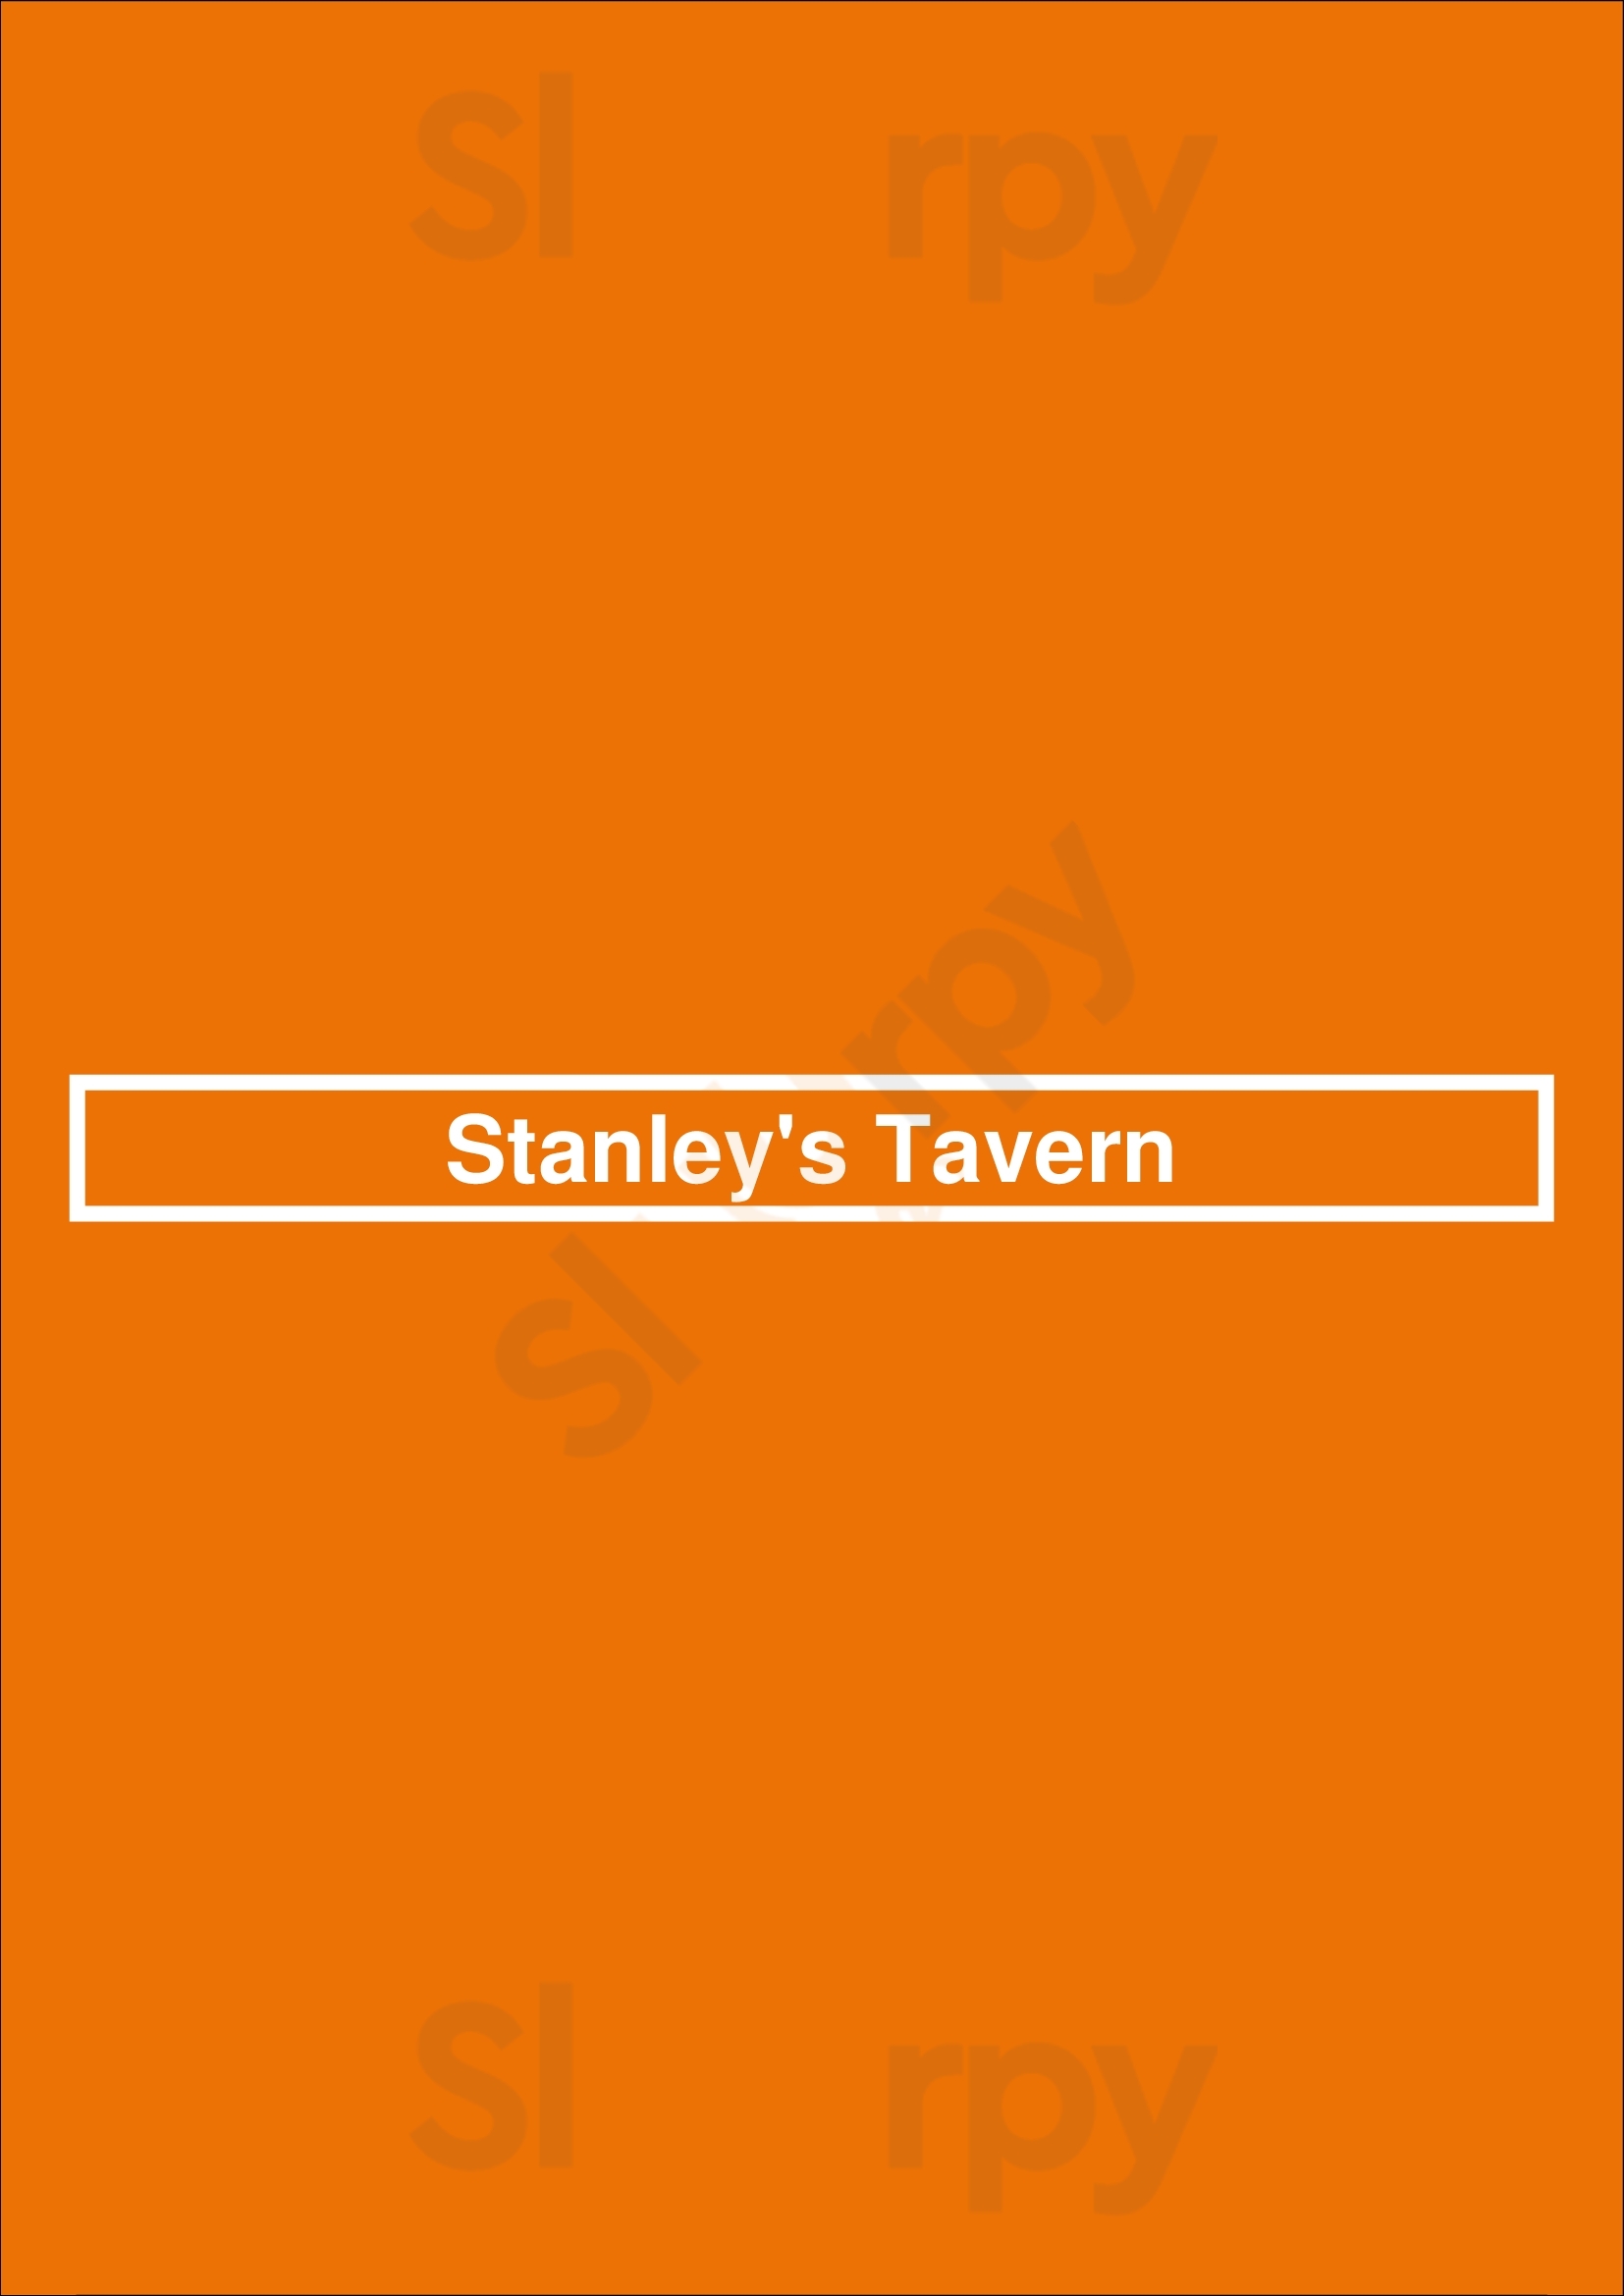 Stanley's Tavern Wilmington Menu - 1